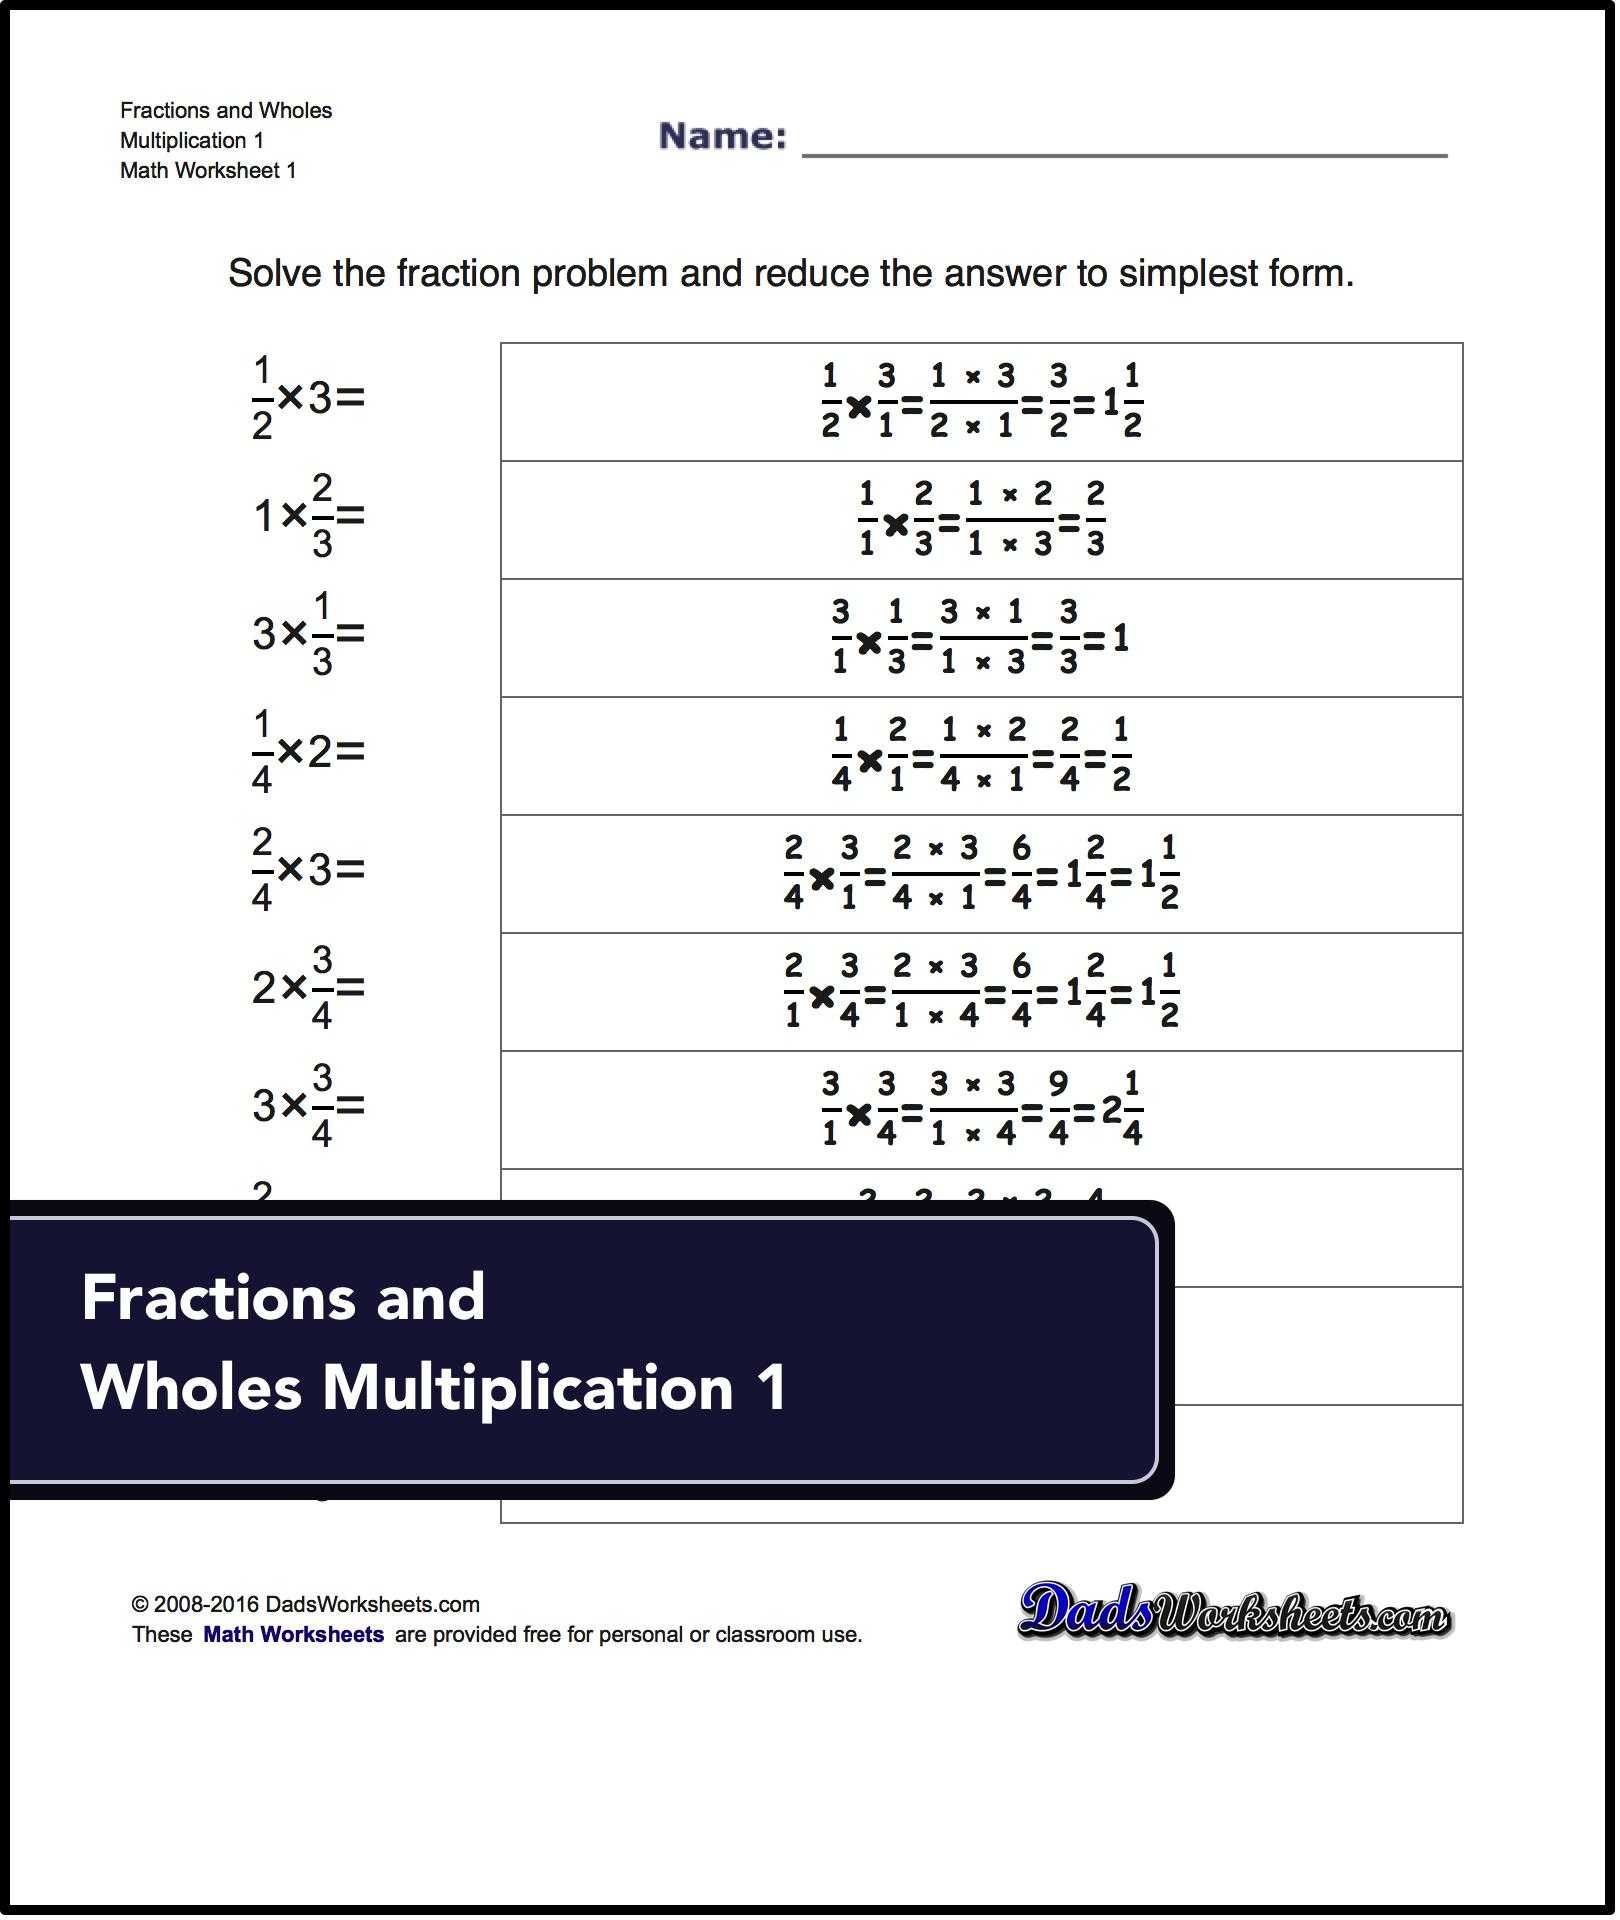 Extended Algebra 1 Functions Worksheet 4 Answers and Math Worksheets and Answers Lovely Worksheet Transformation